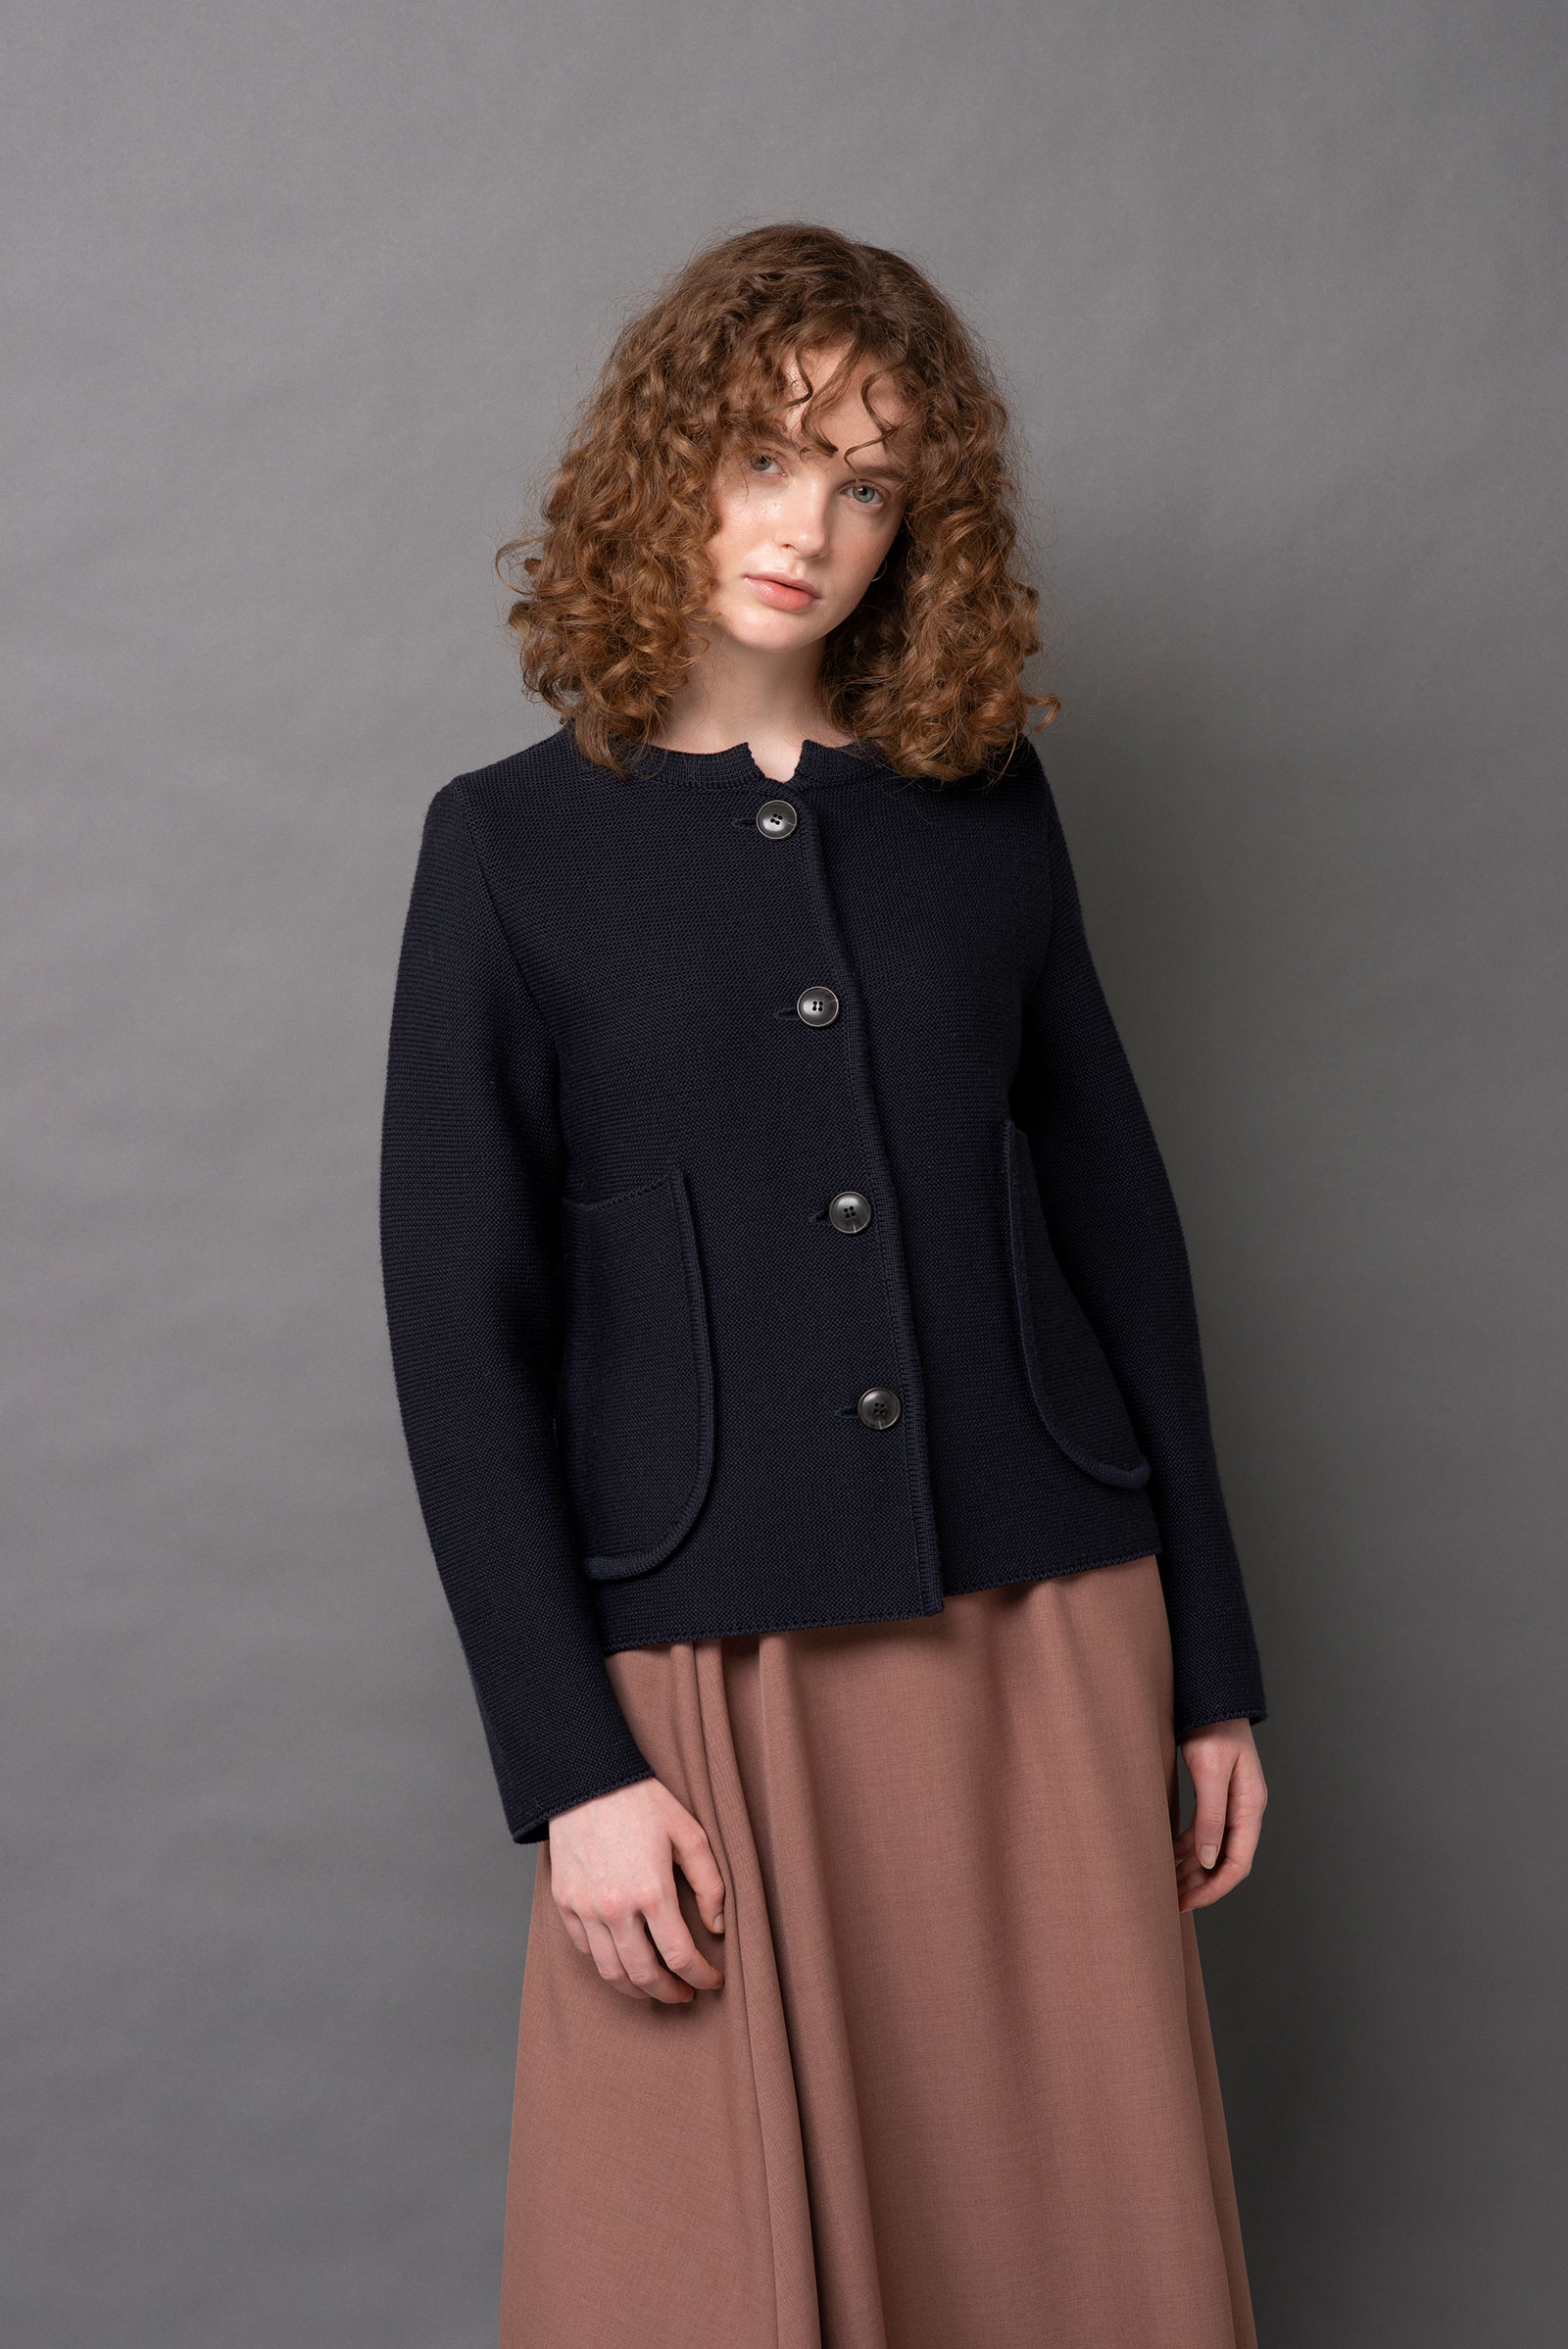 Wool knit jacket / Twill flare skirt - manna